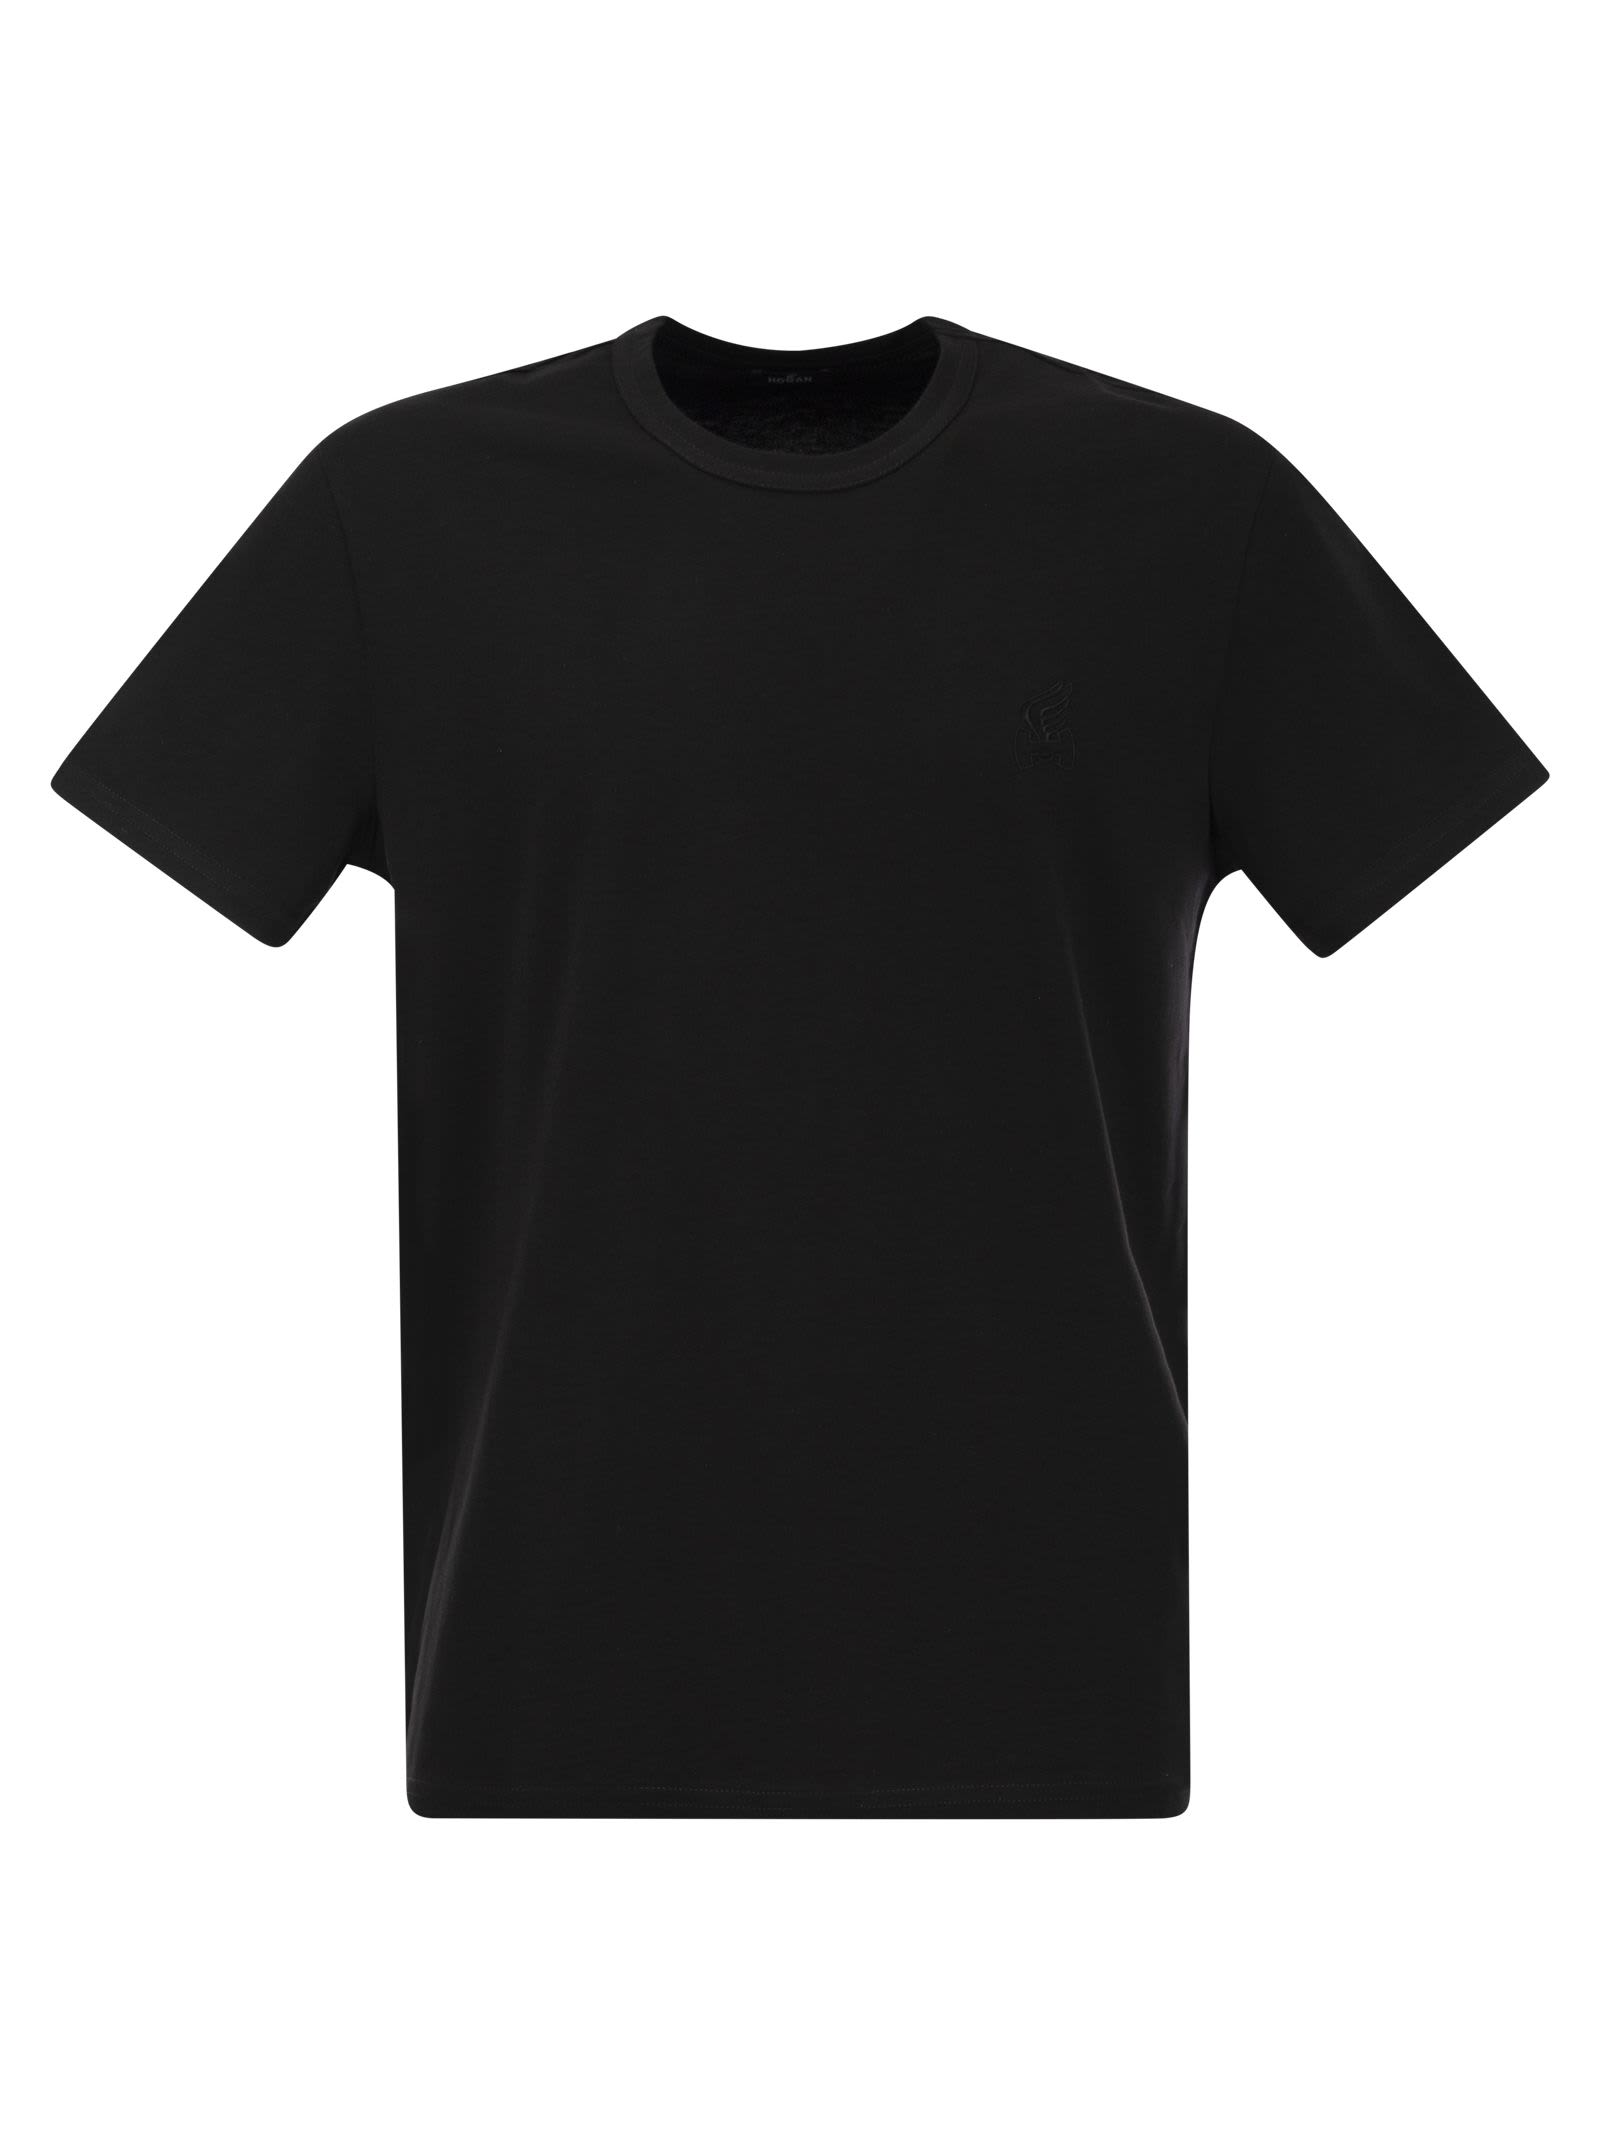 Hogan Cotton Jersey T-shirt In Black